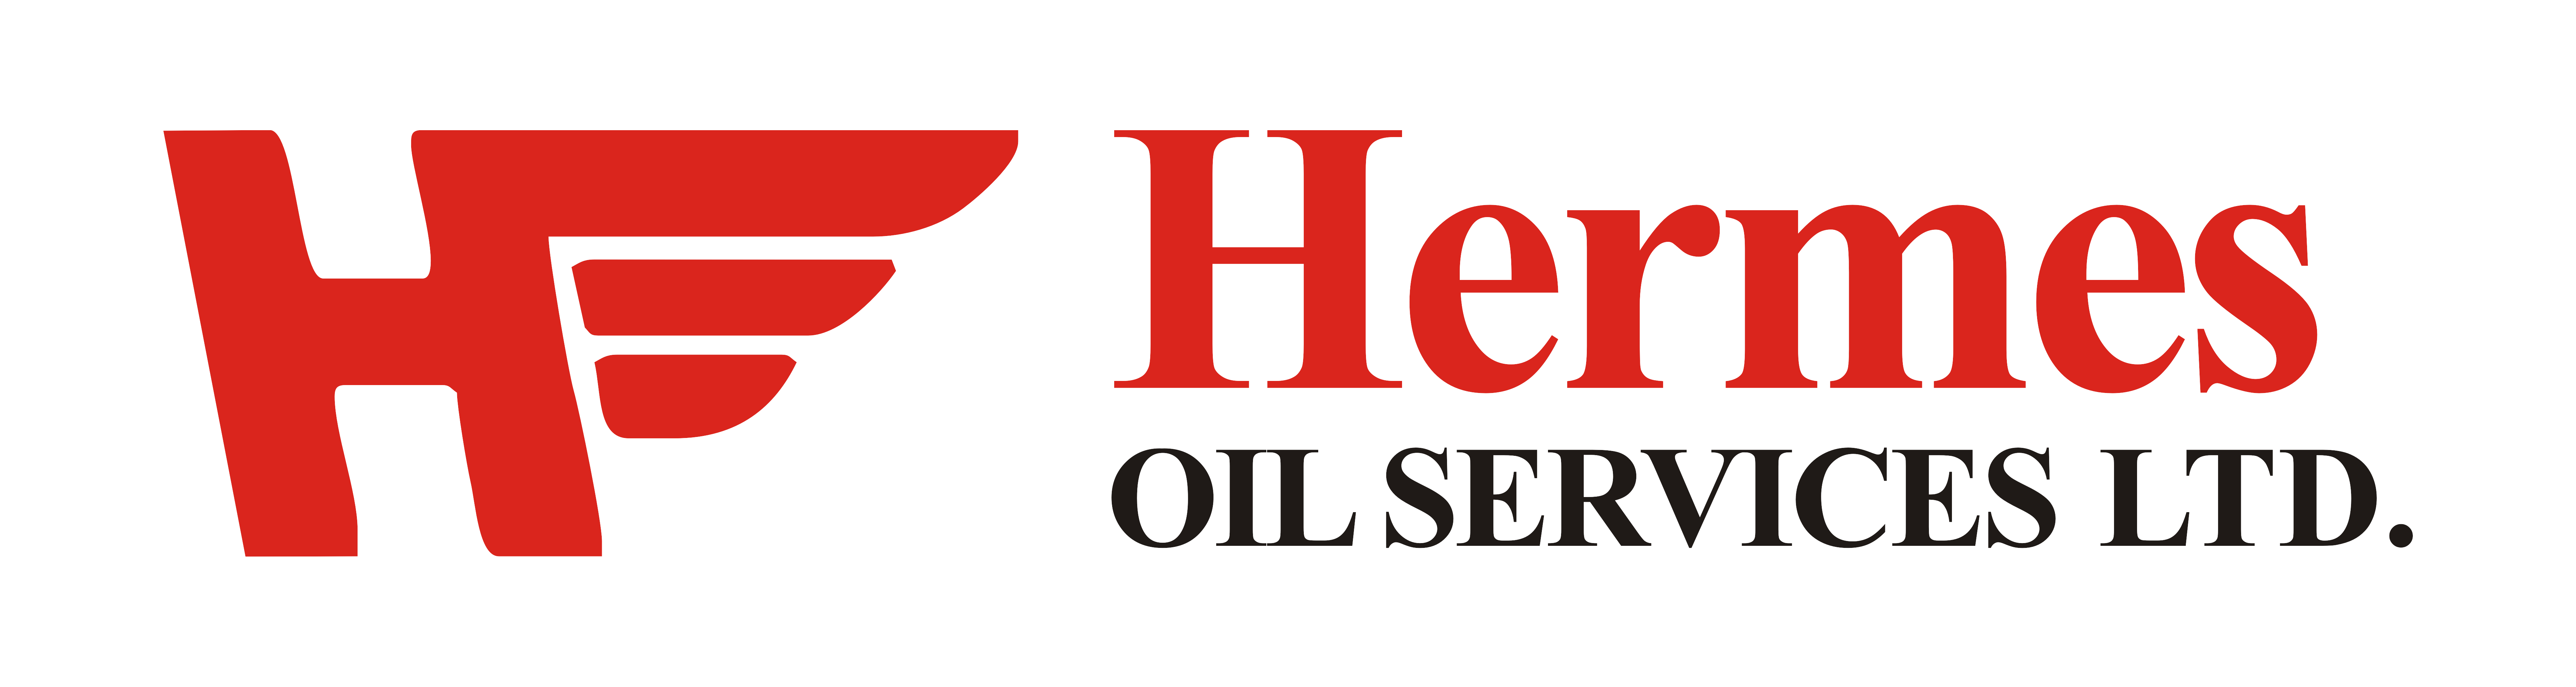 Hermes Oil Services Ltd